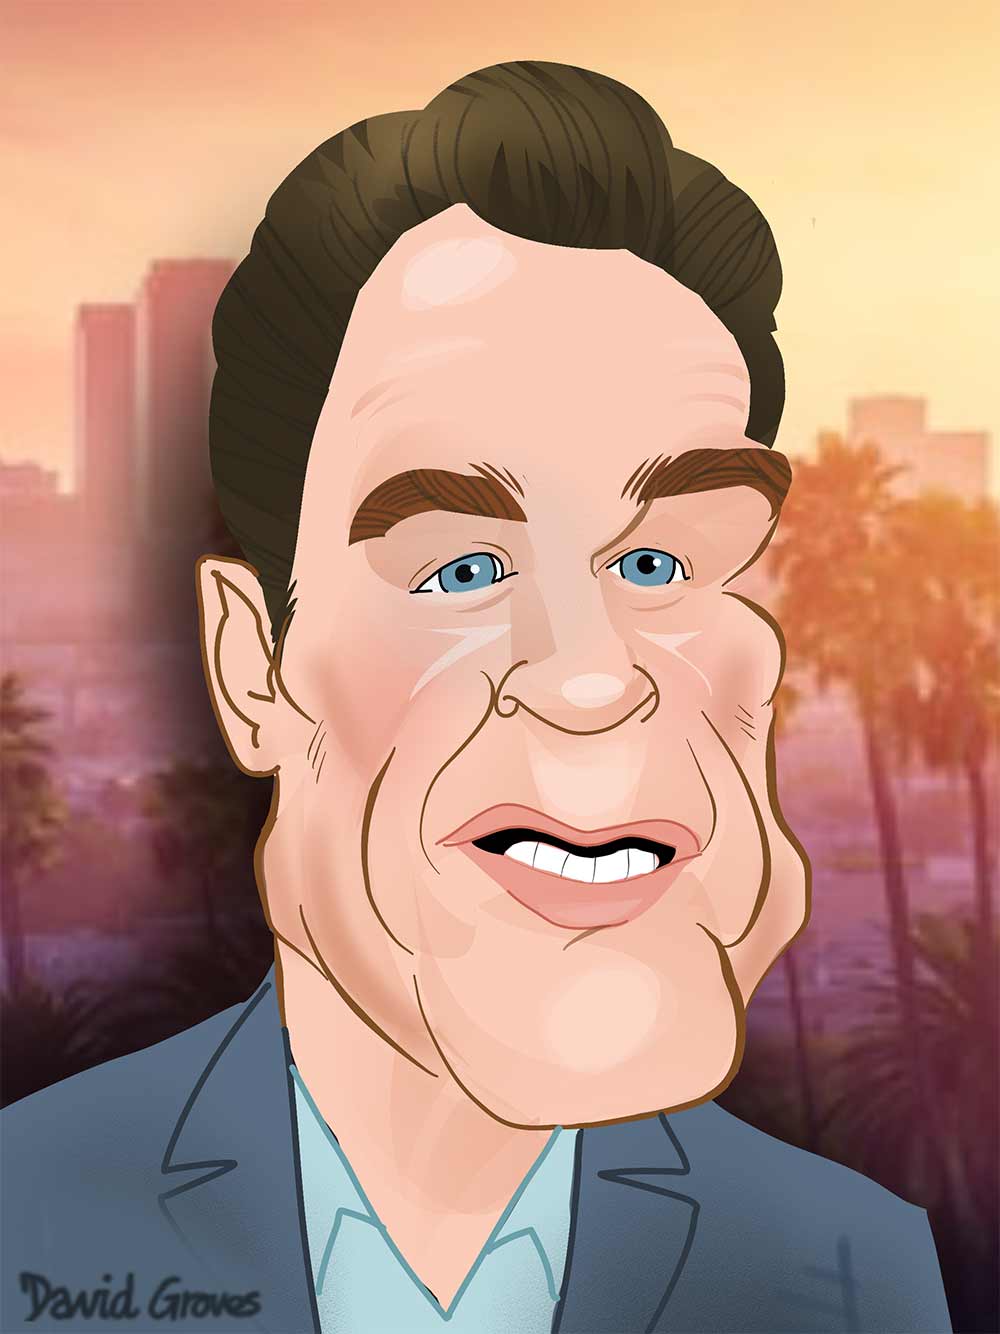 Arnold Schwarzenegger caricature and cartoon